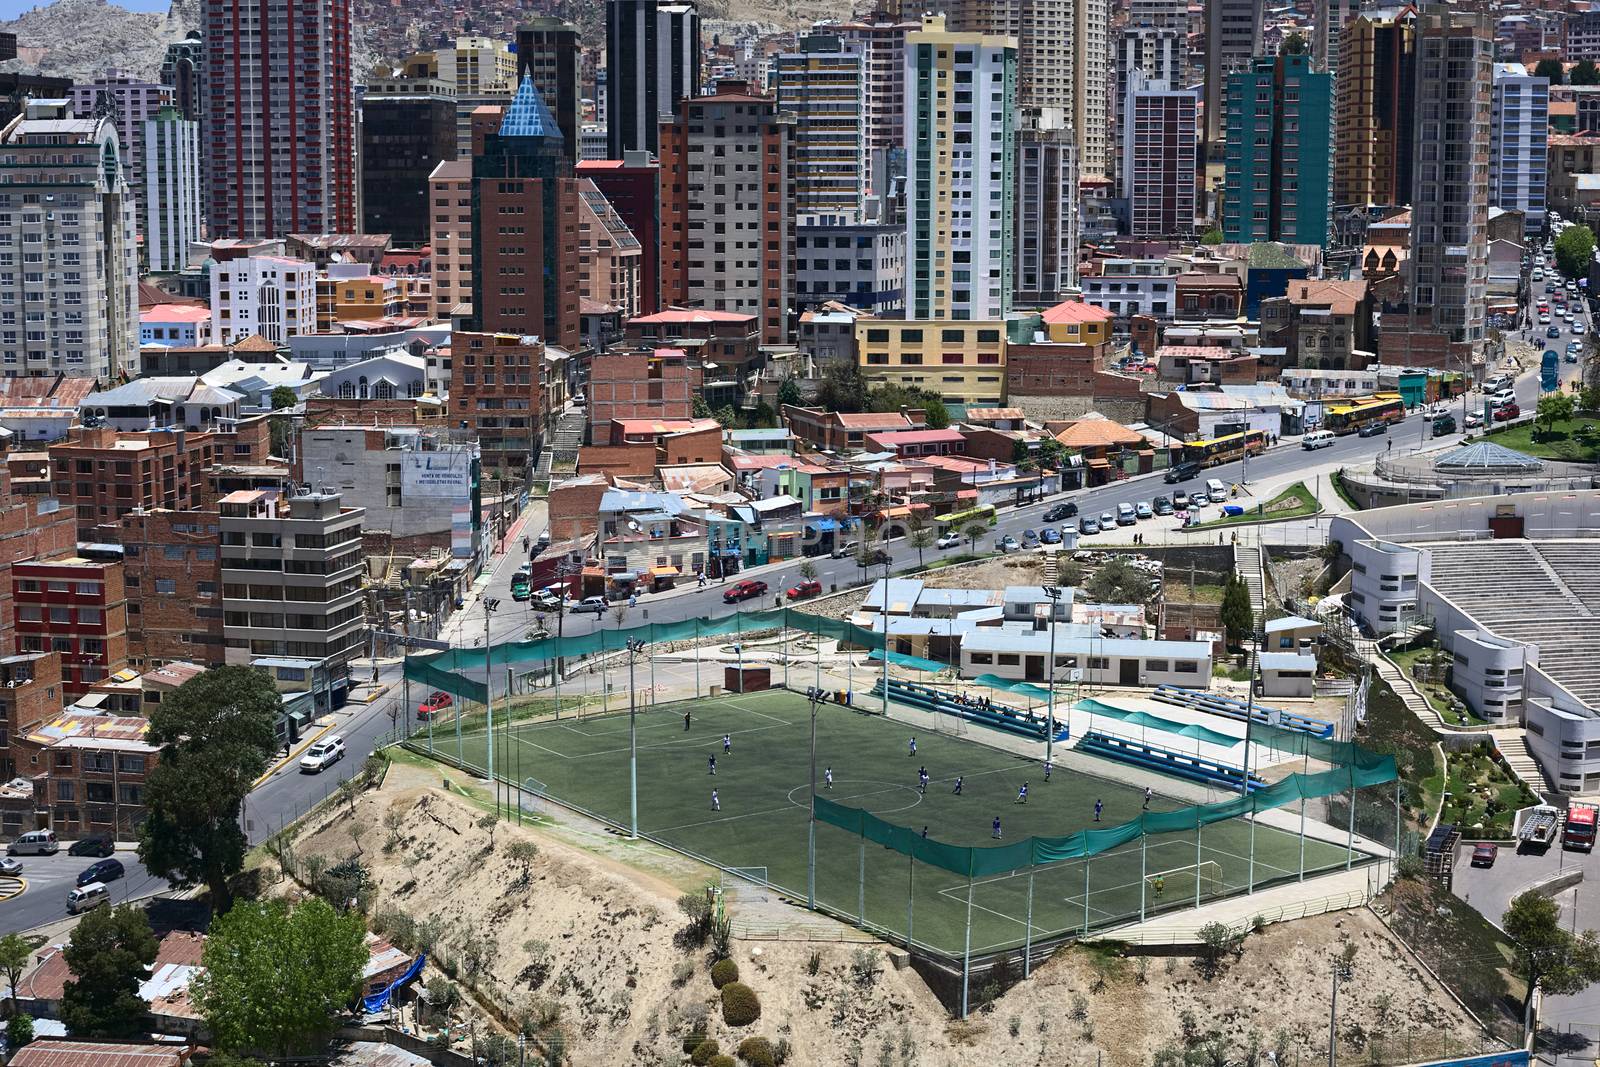 Cancha Zapata Football Pitch in La Paz, Bolivia by sven